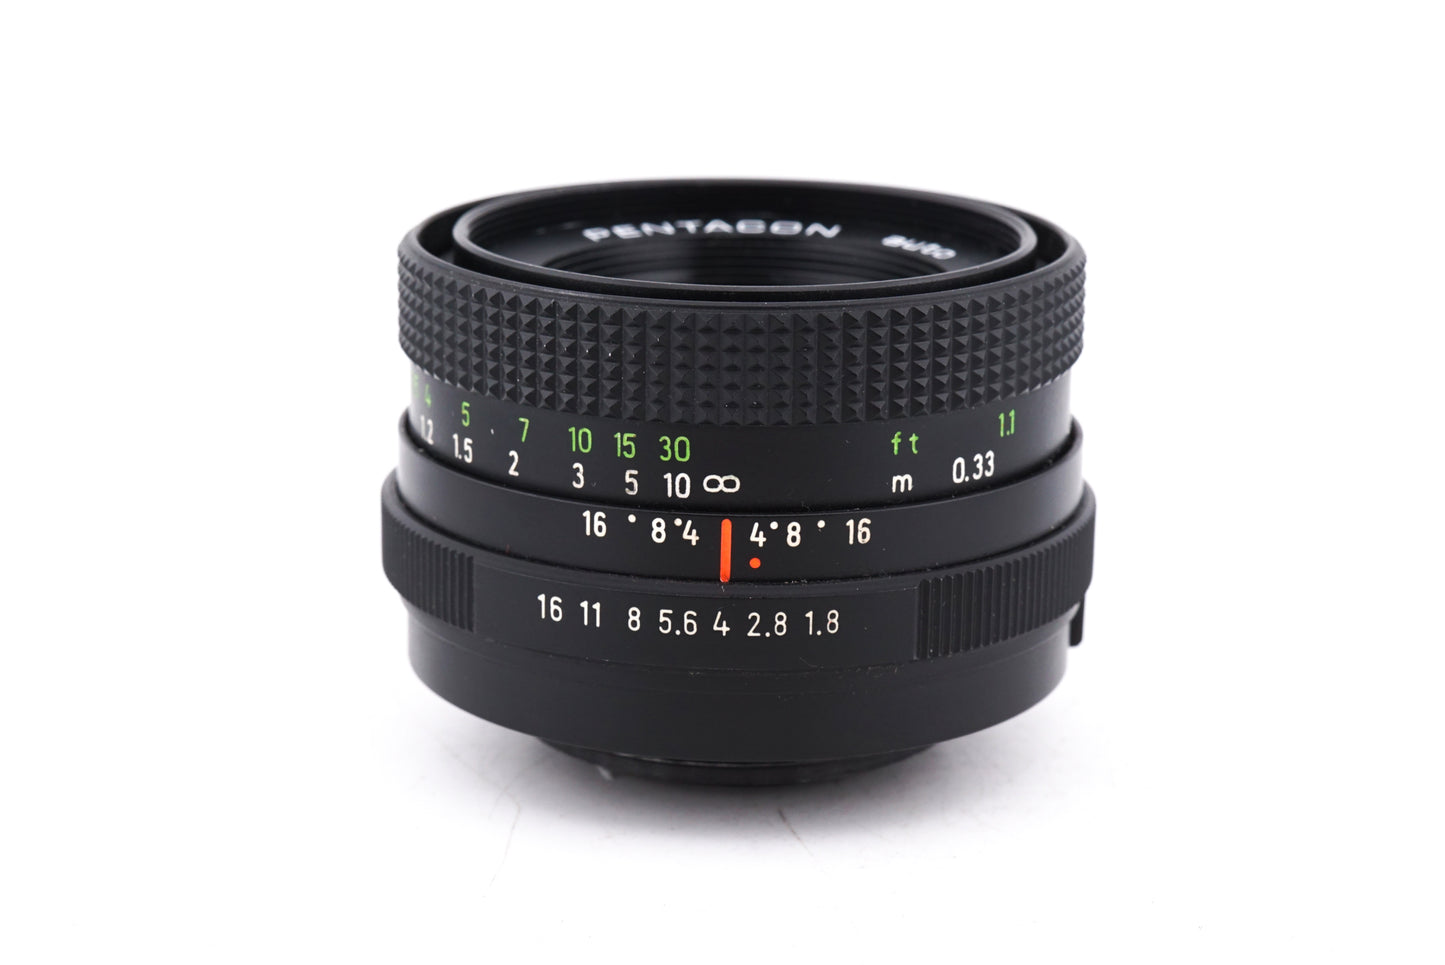 Pentacon 50mm f1.8 Auto - Lens